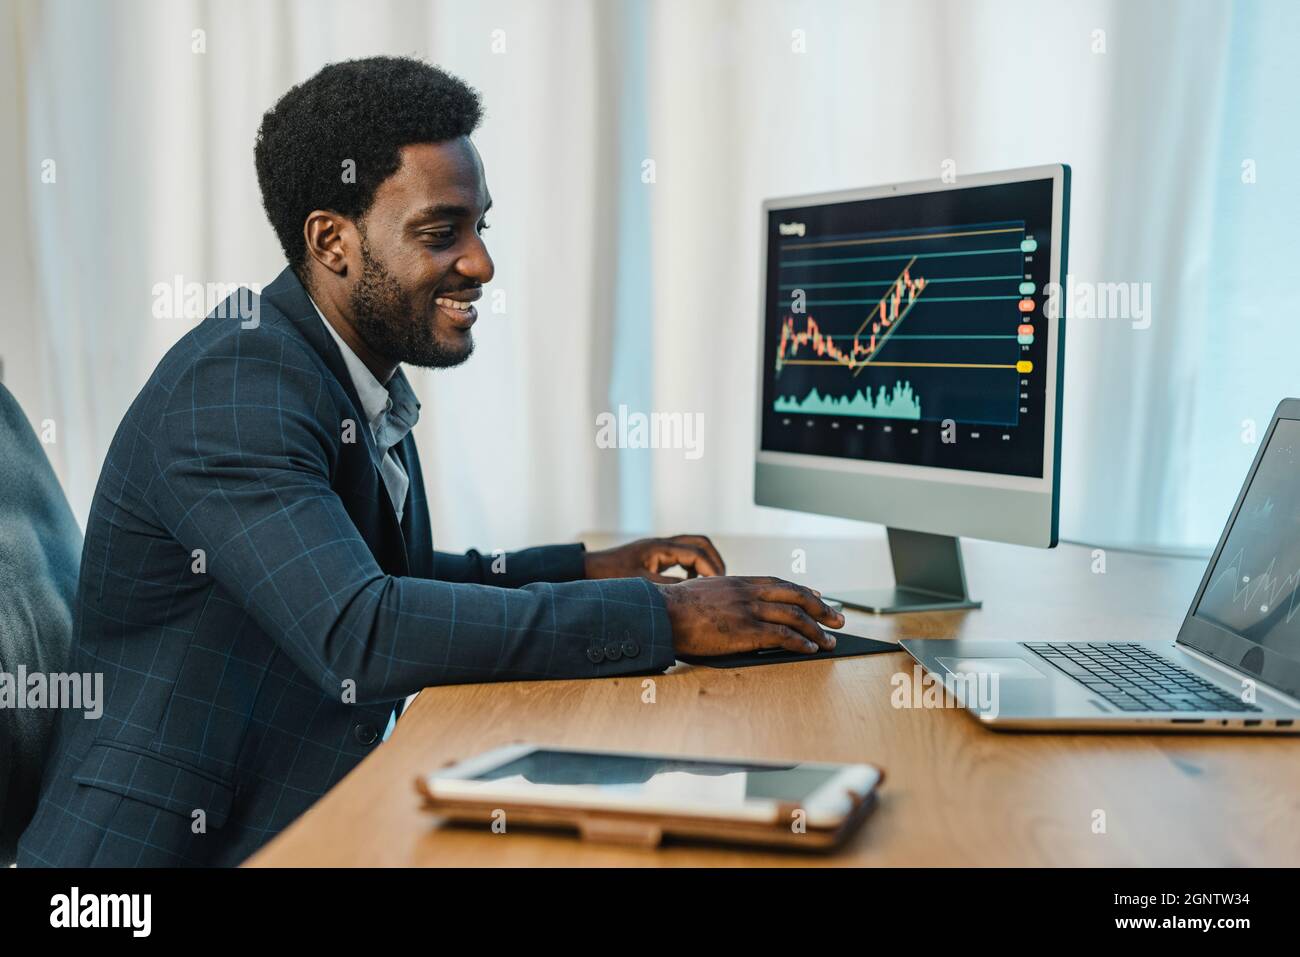 Black man working with binary option Stock Photo